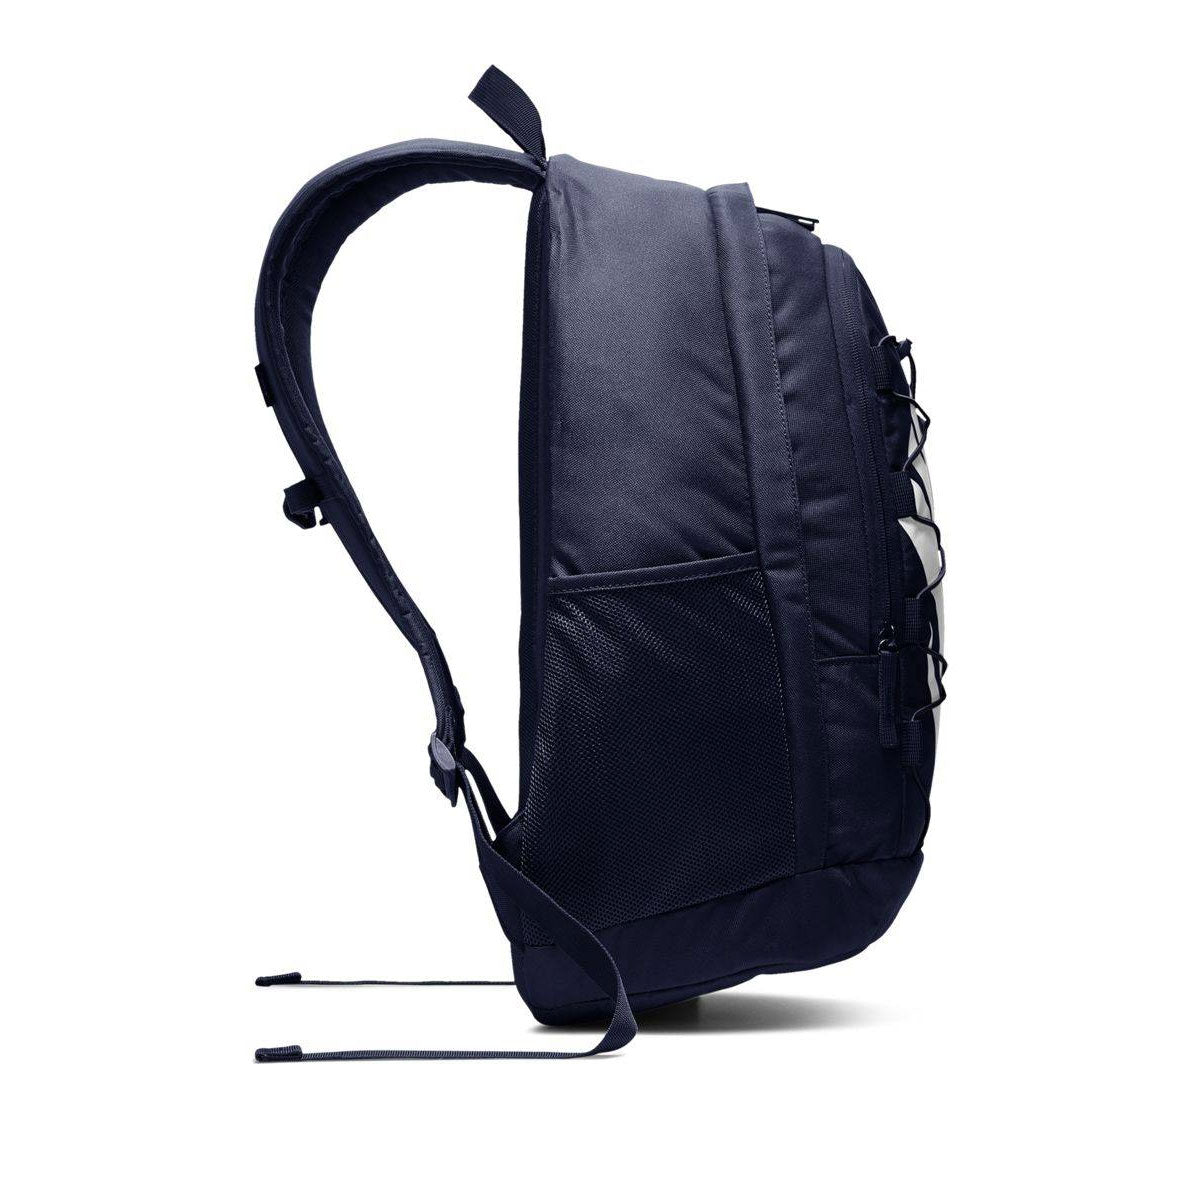 Nike Hayward 2.0 Backpack